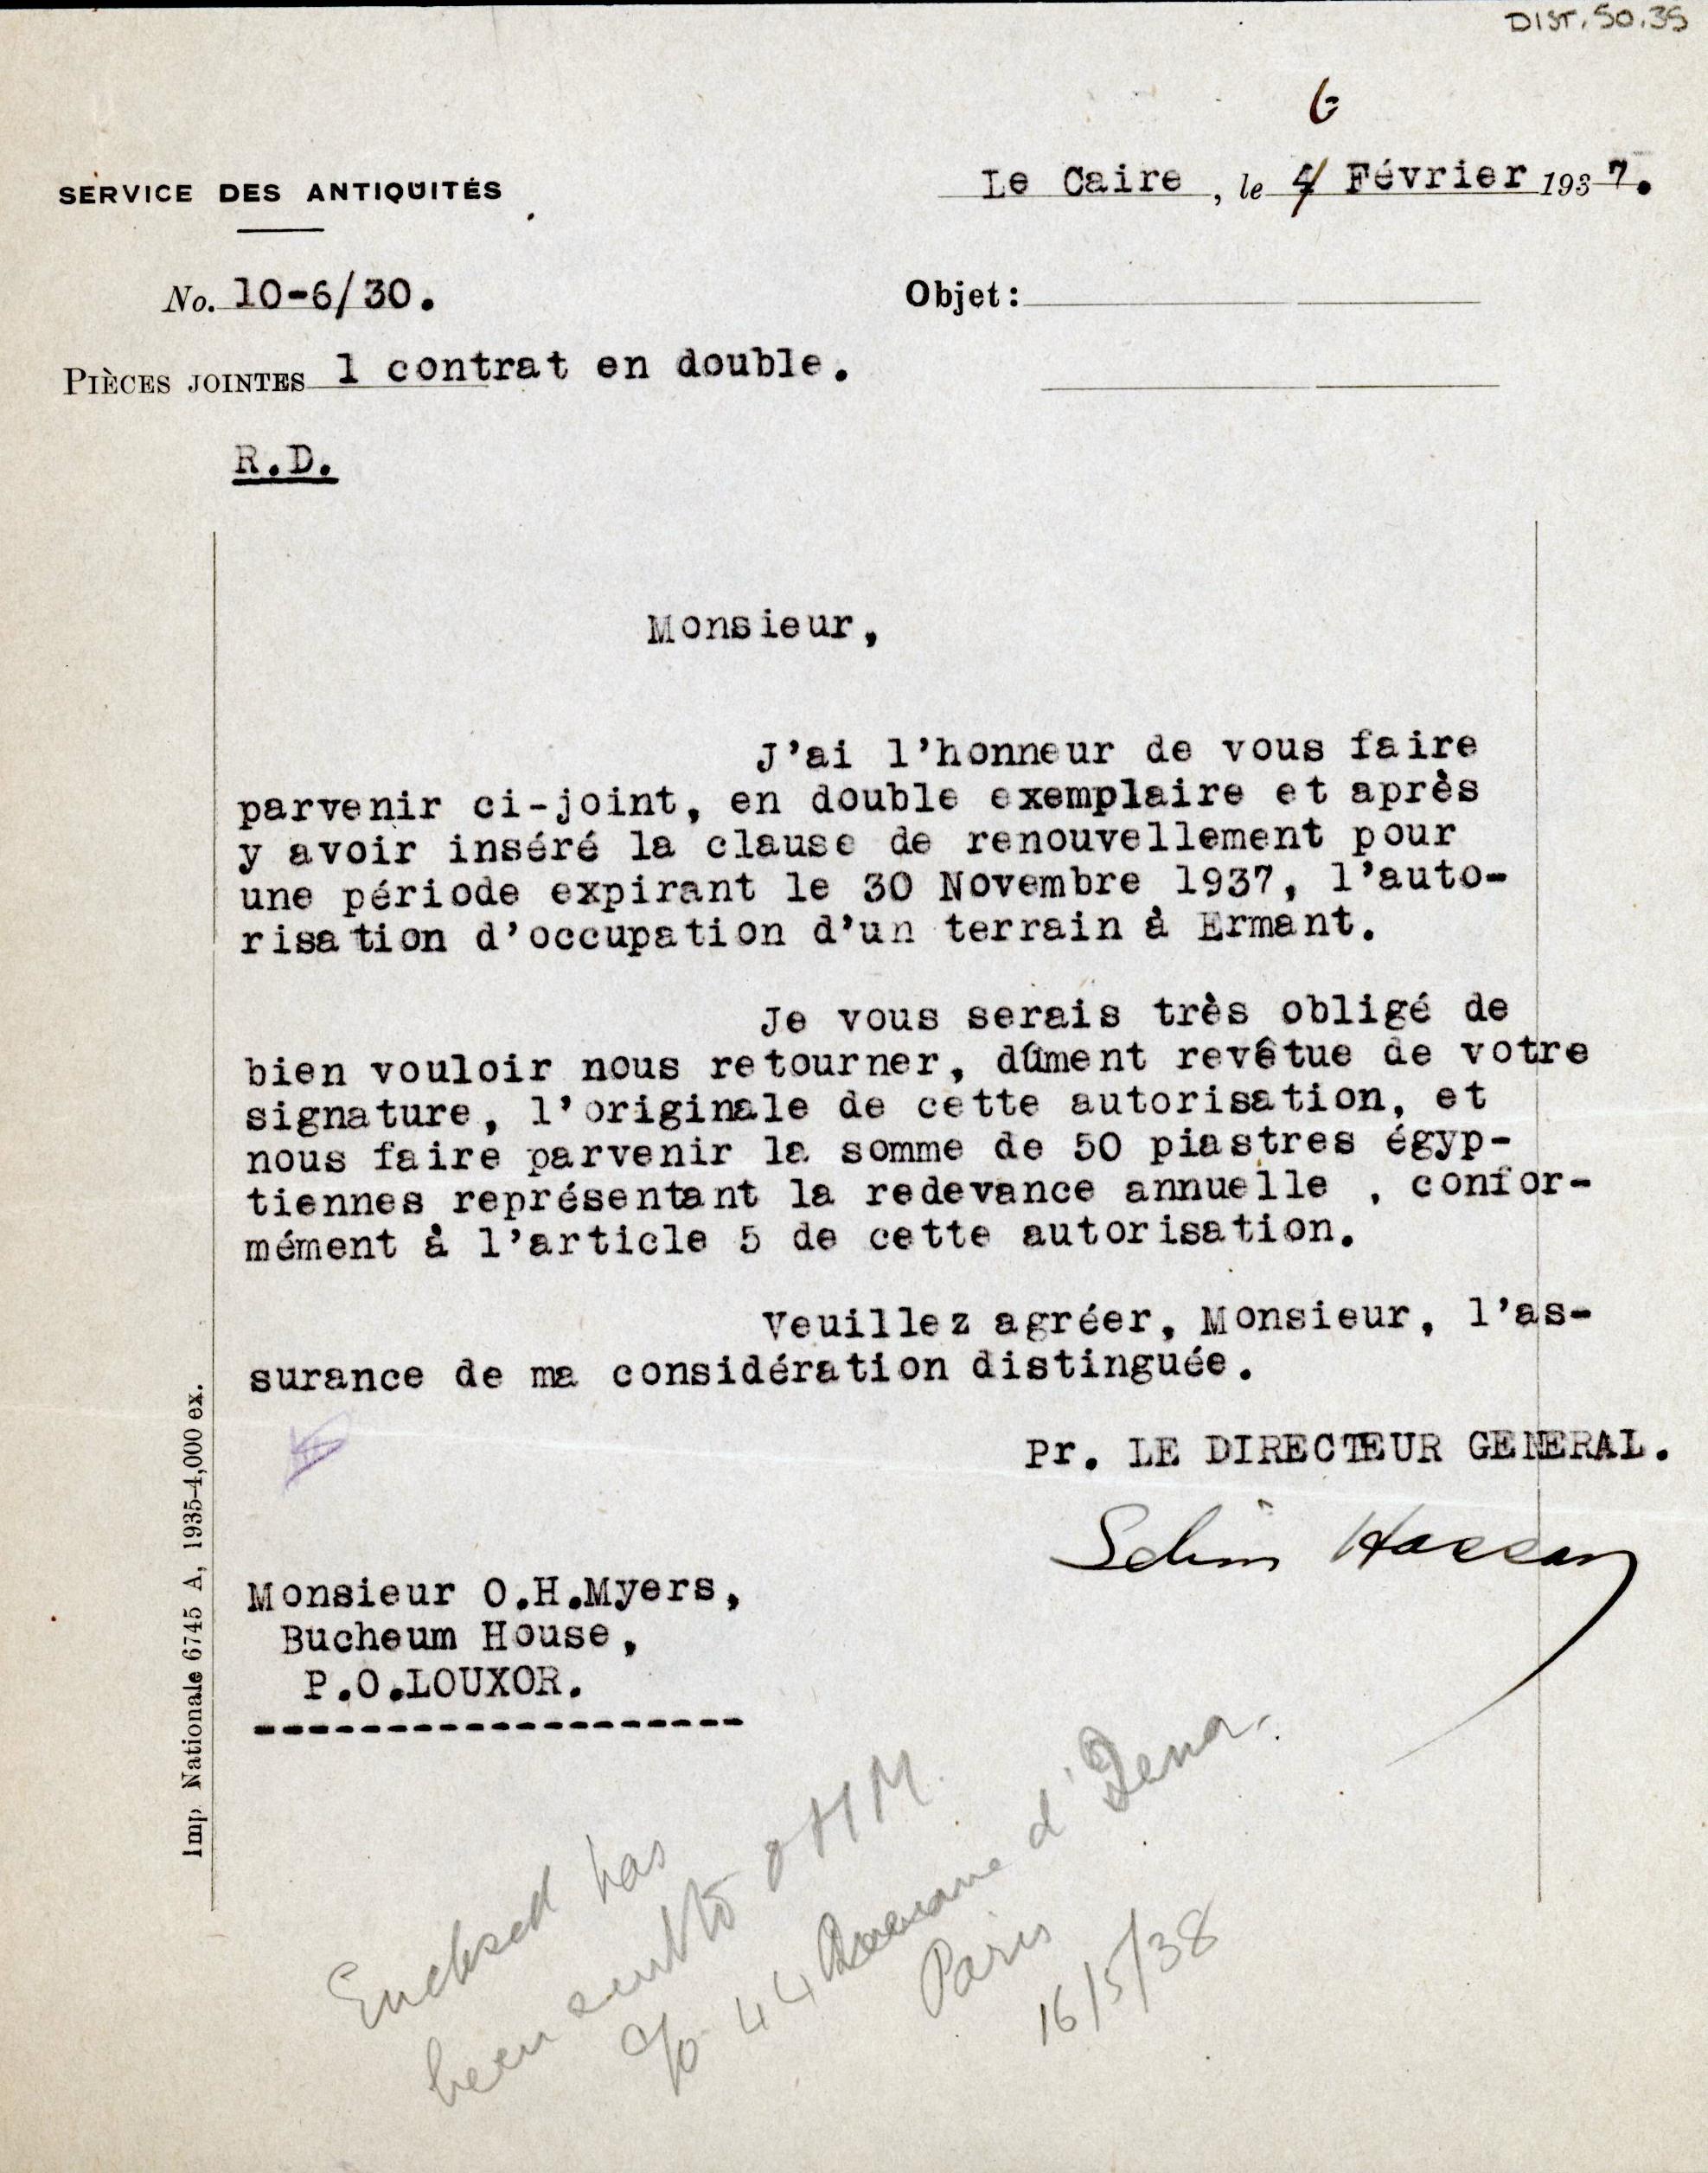 1926-39 correspondence with Antiquities Service DIST.50.35